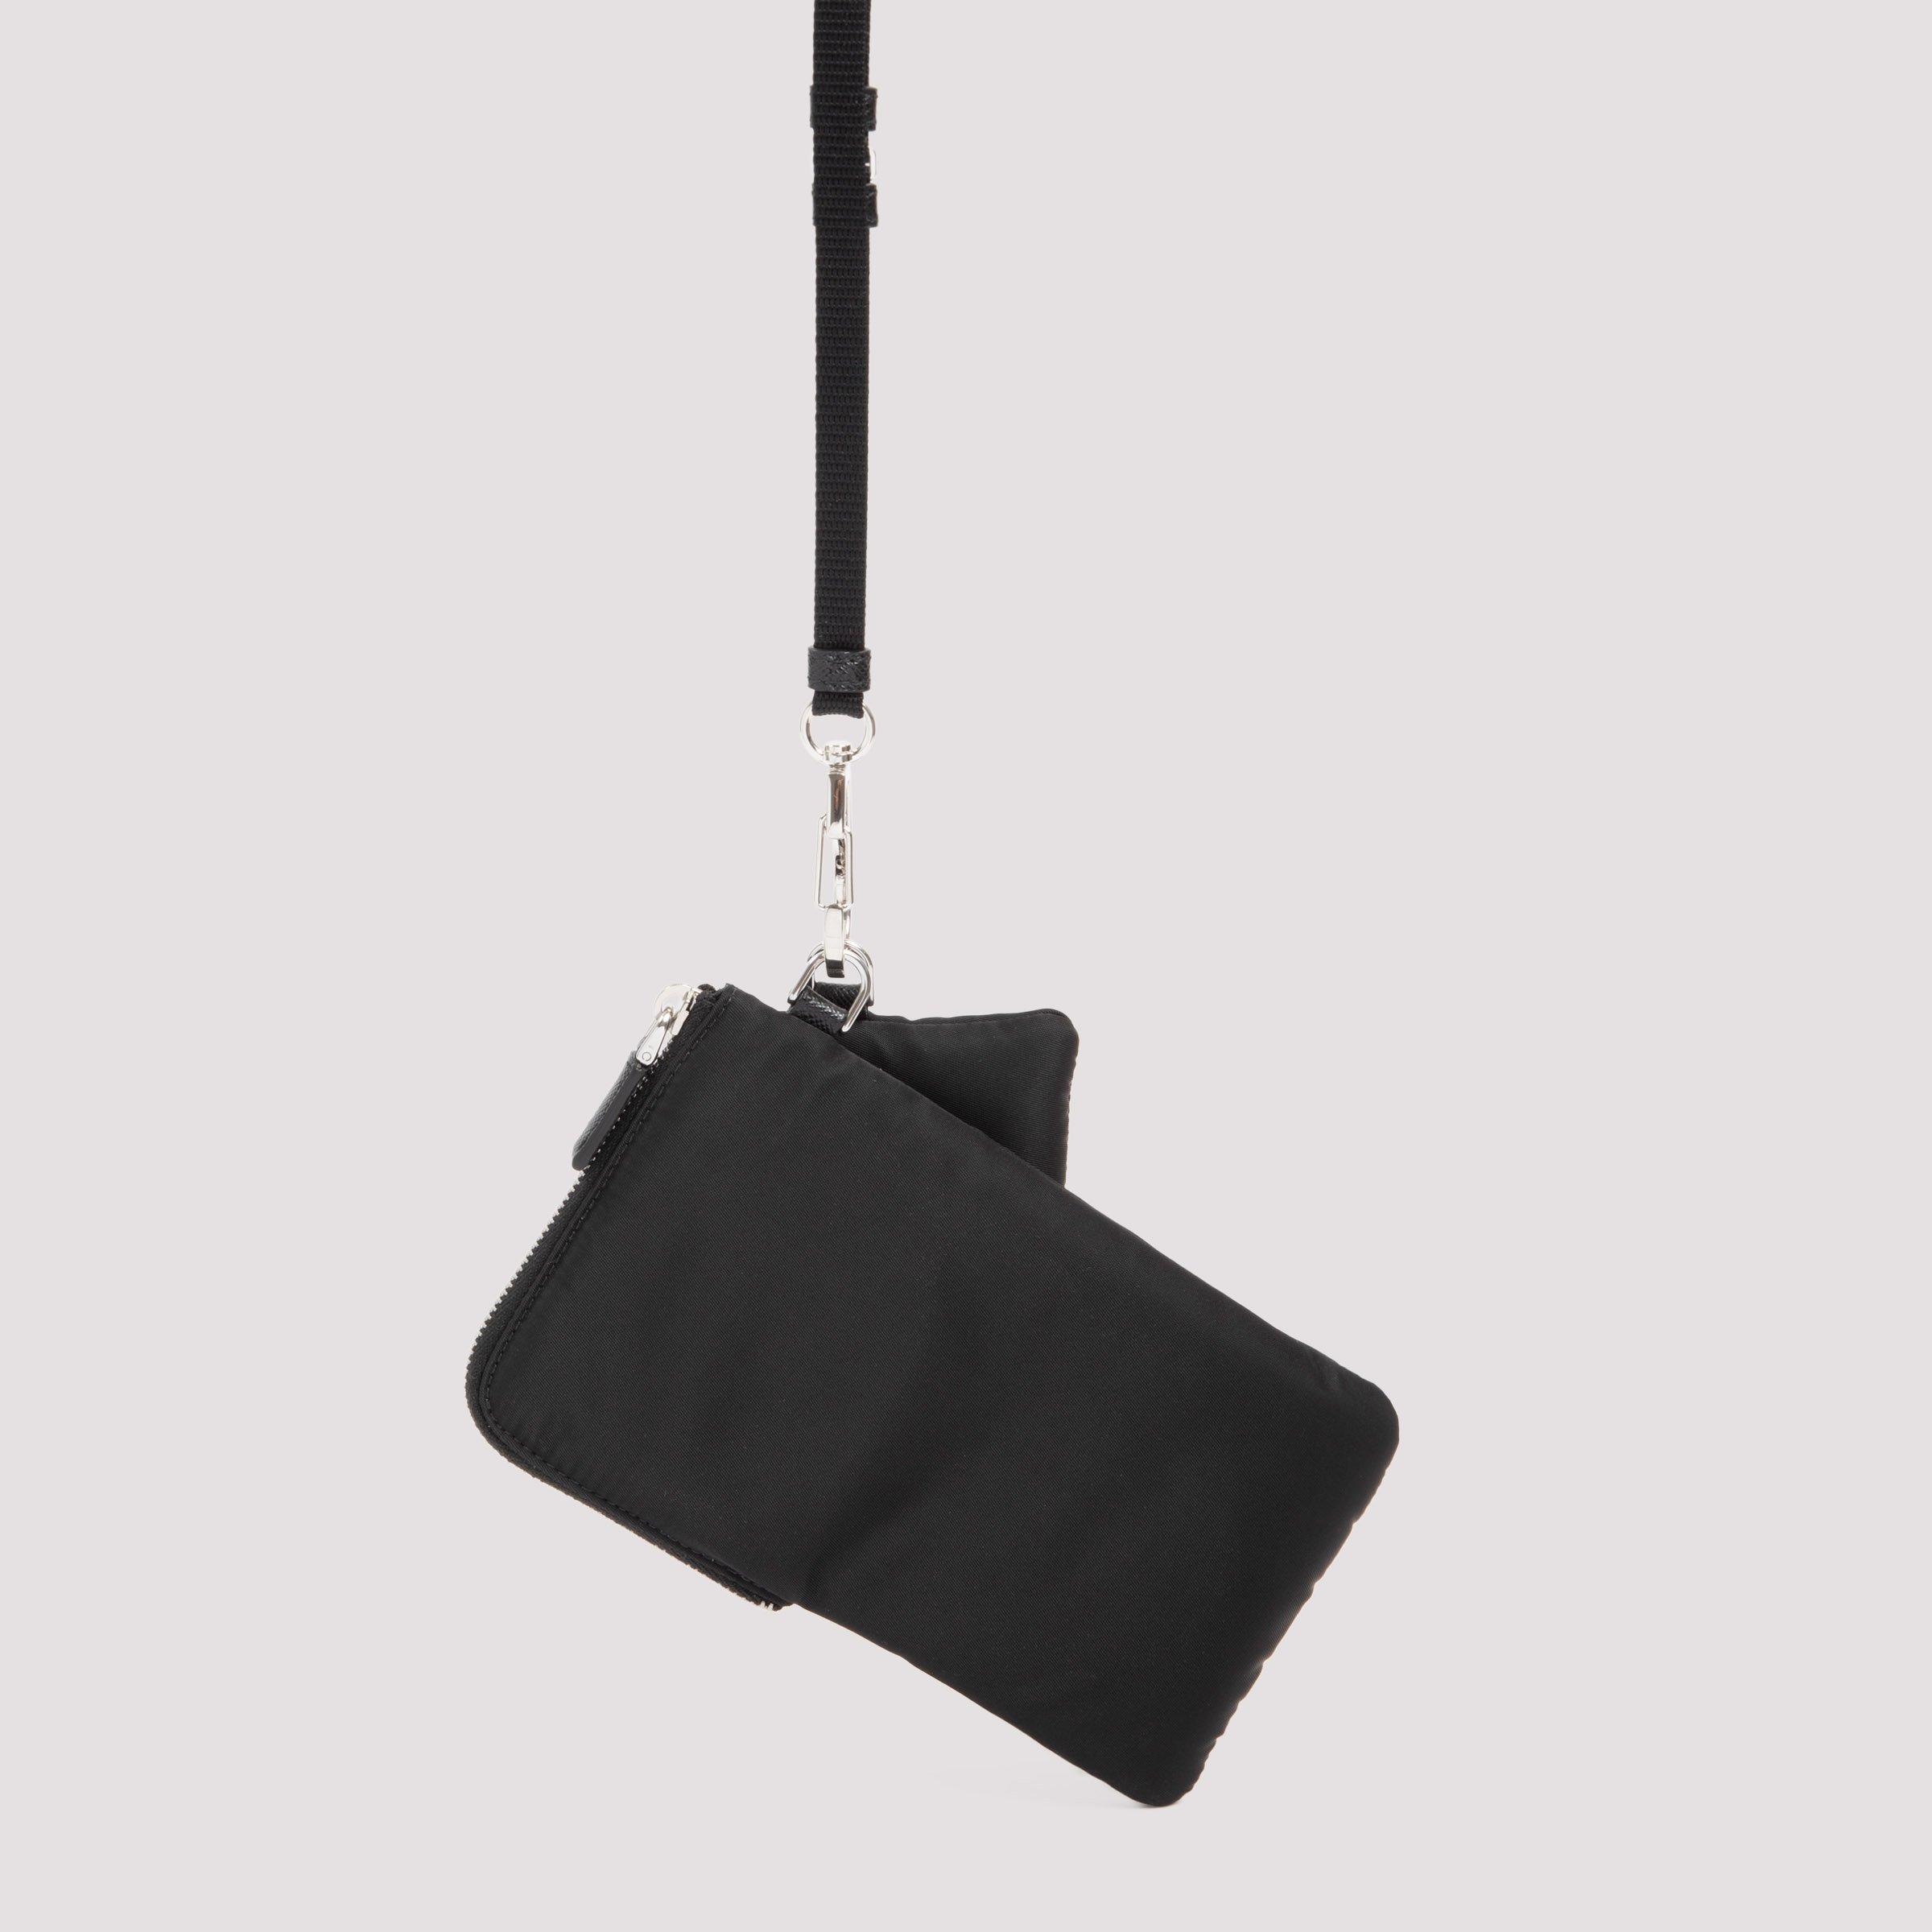 Prada Shoulder Strap With Re-nylon Pouch in Black for Men